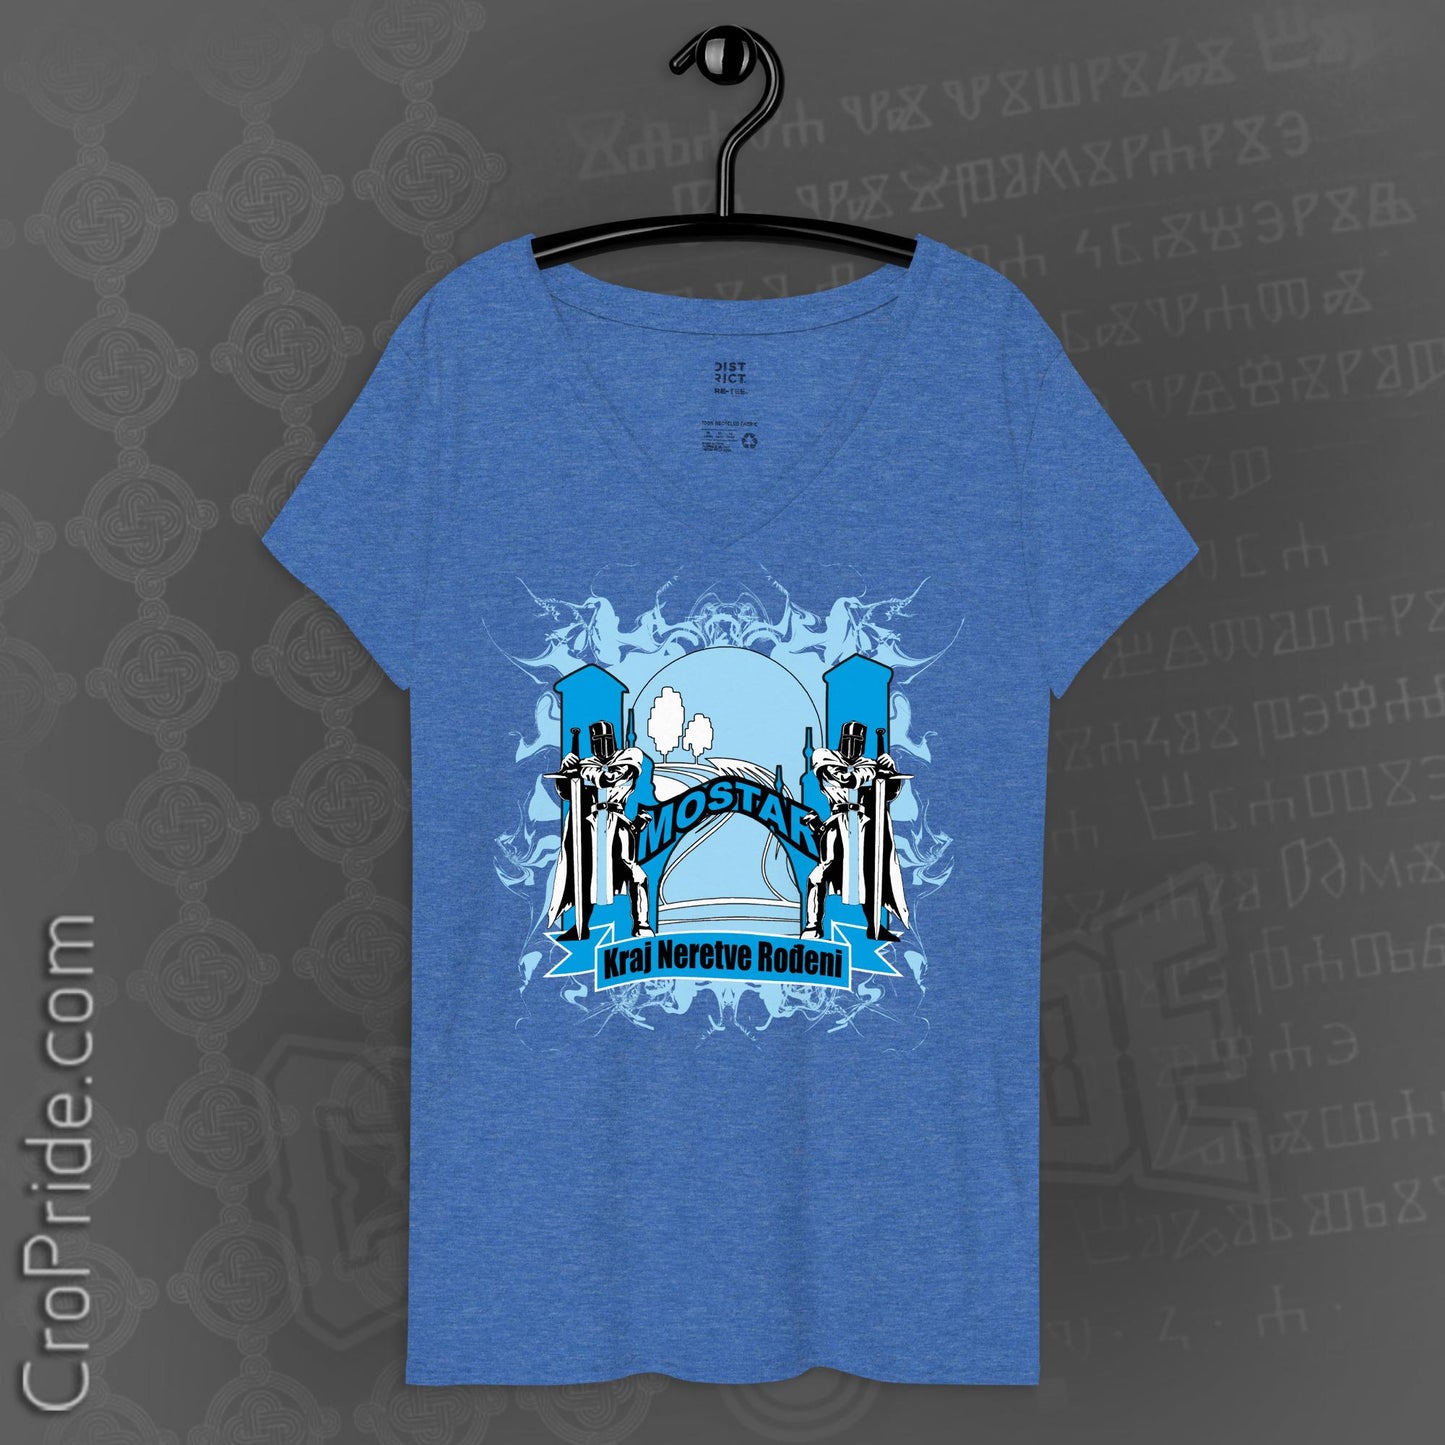  "Mostar"-Hercegovina Women’s T-shirt Designed By CroPride Gear